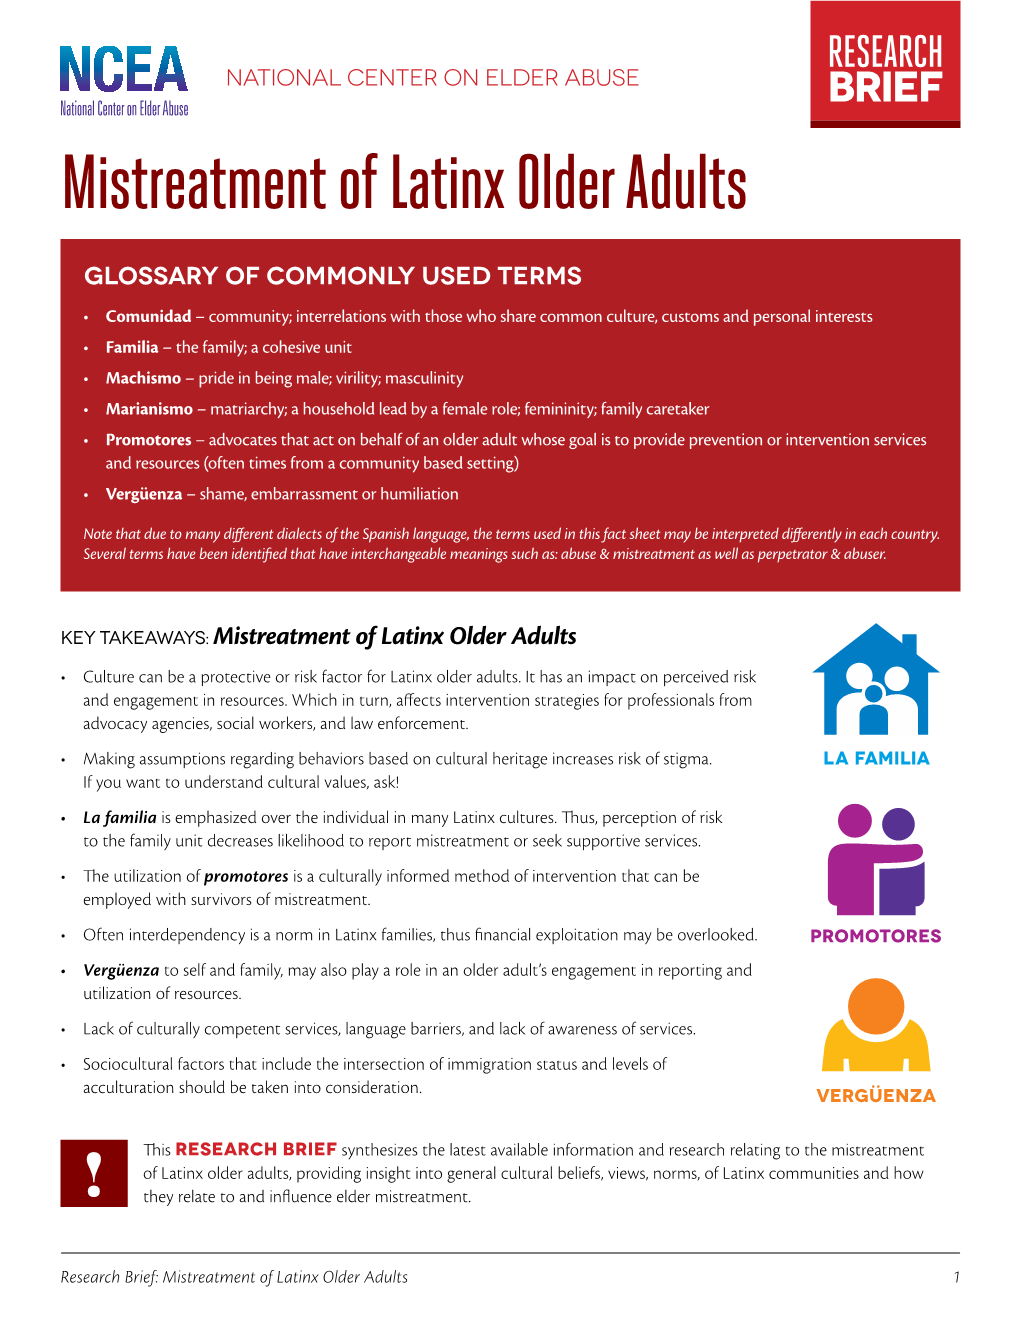 Mistreatment of Latinx Older Adults